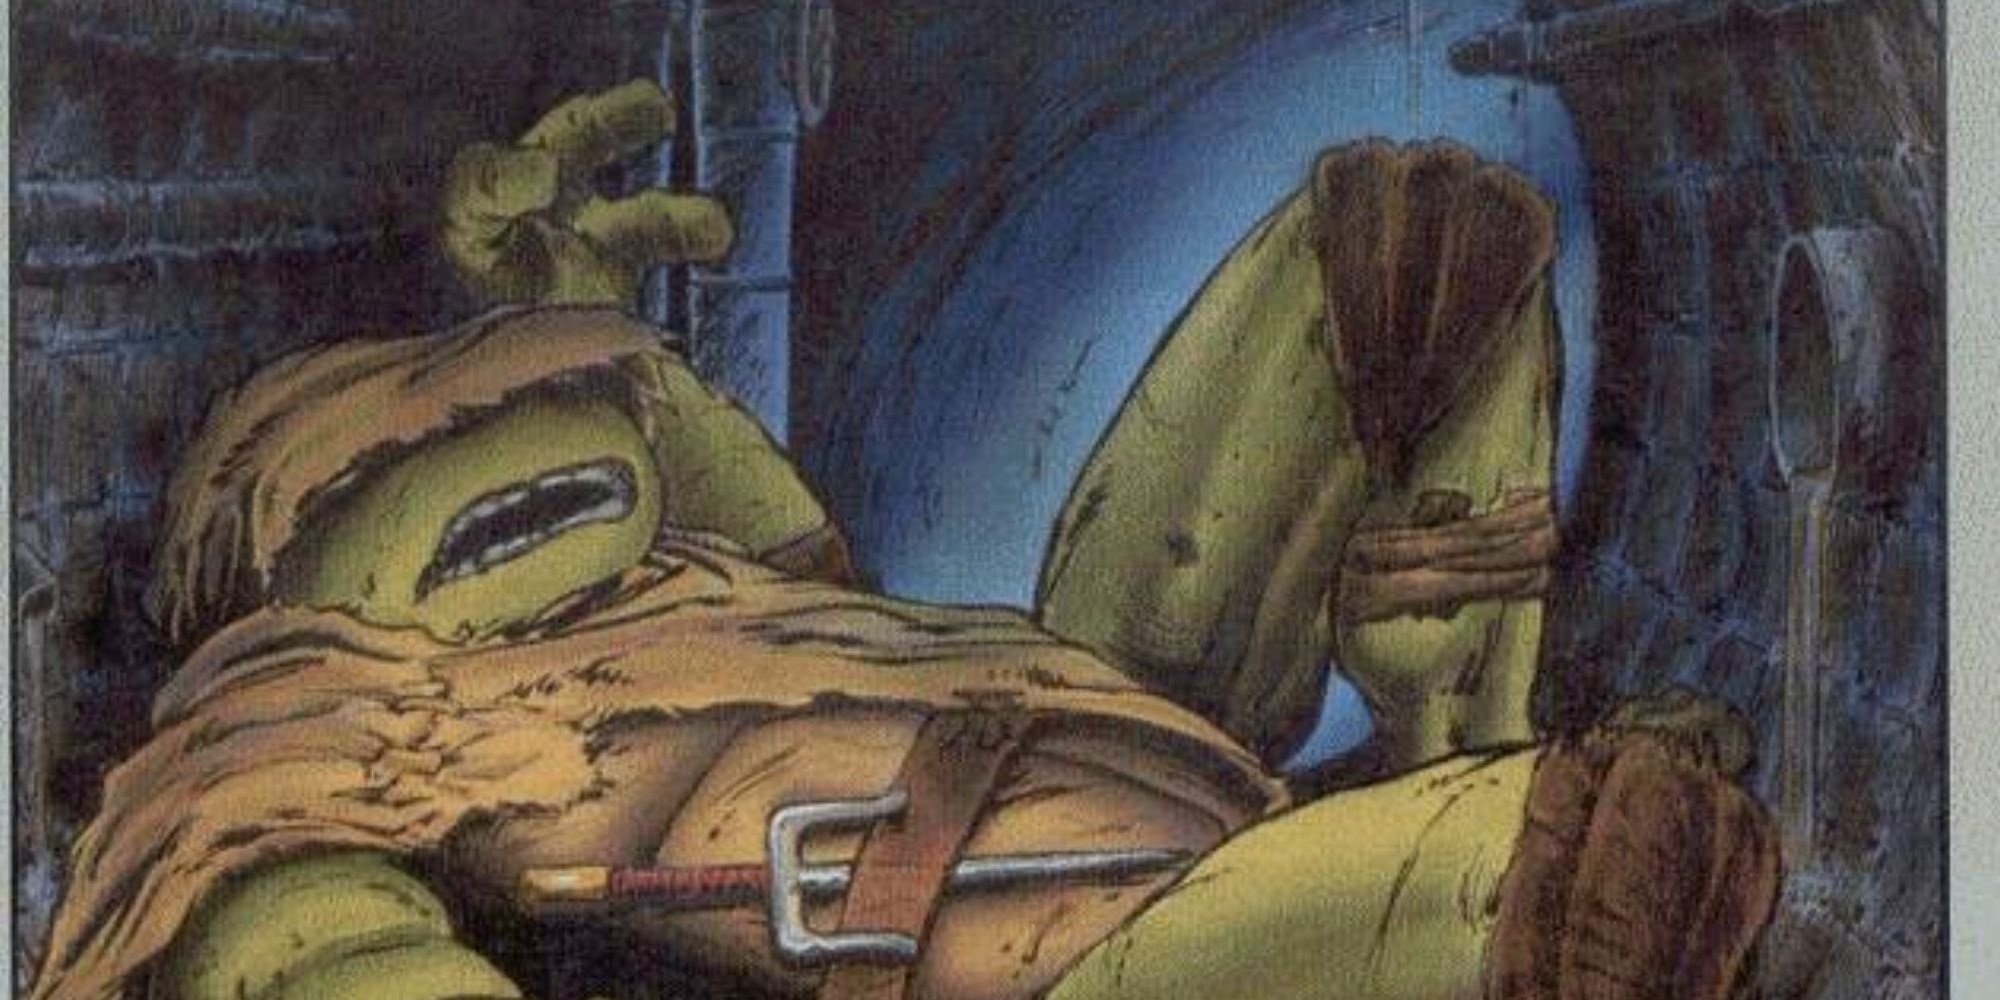 A ninja turtle sleeps in a sewer in Teenage Mutant Ninja Turtles comics.